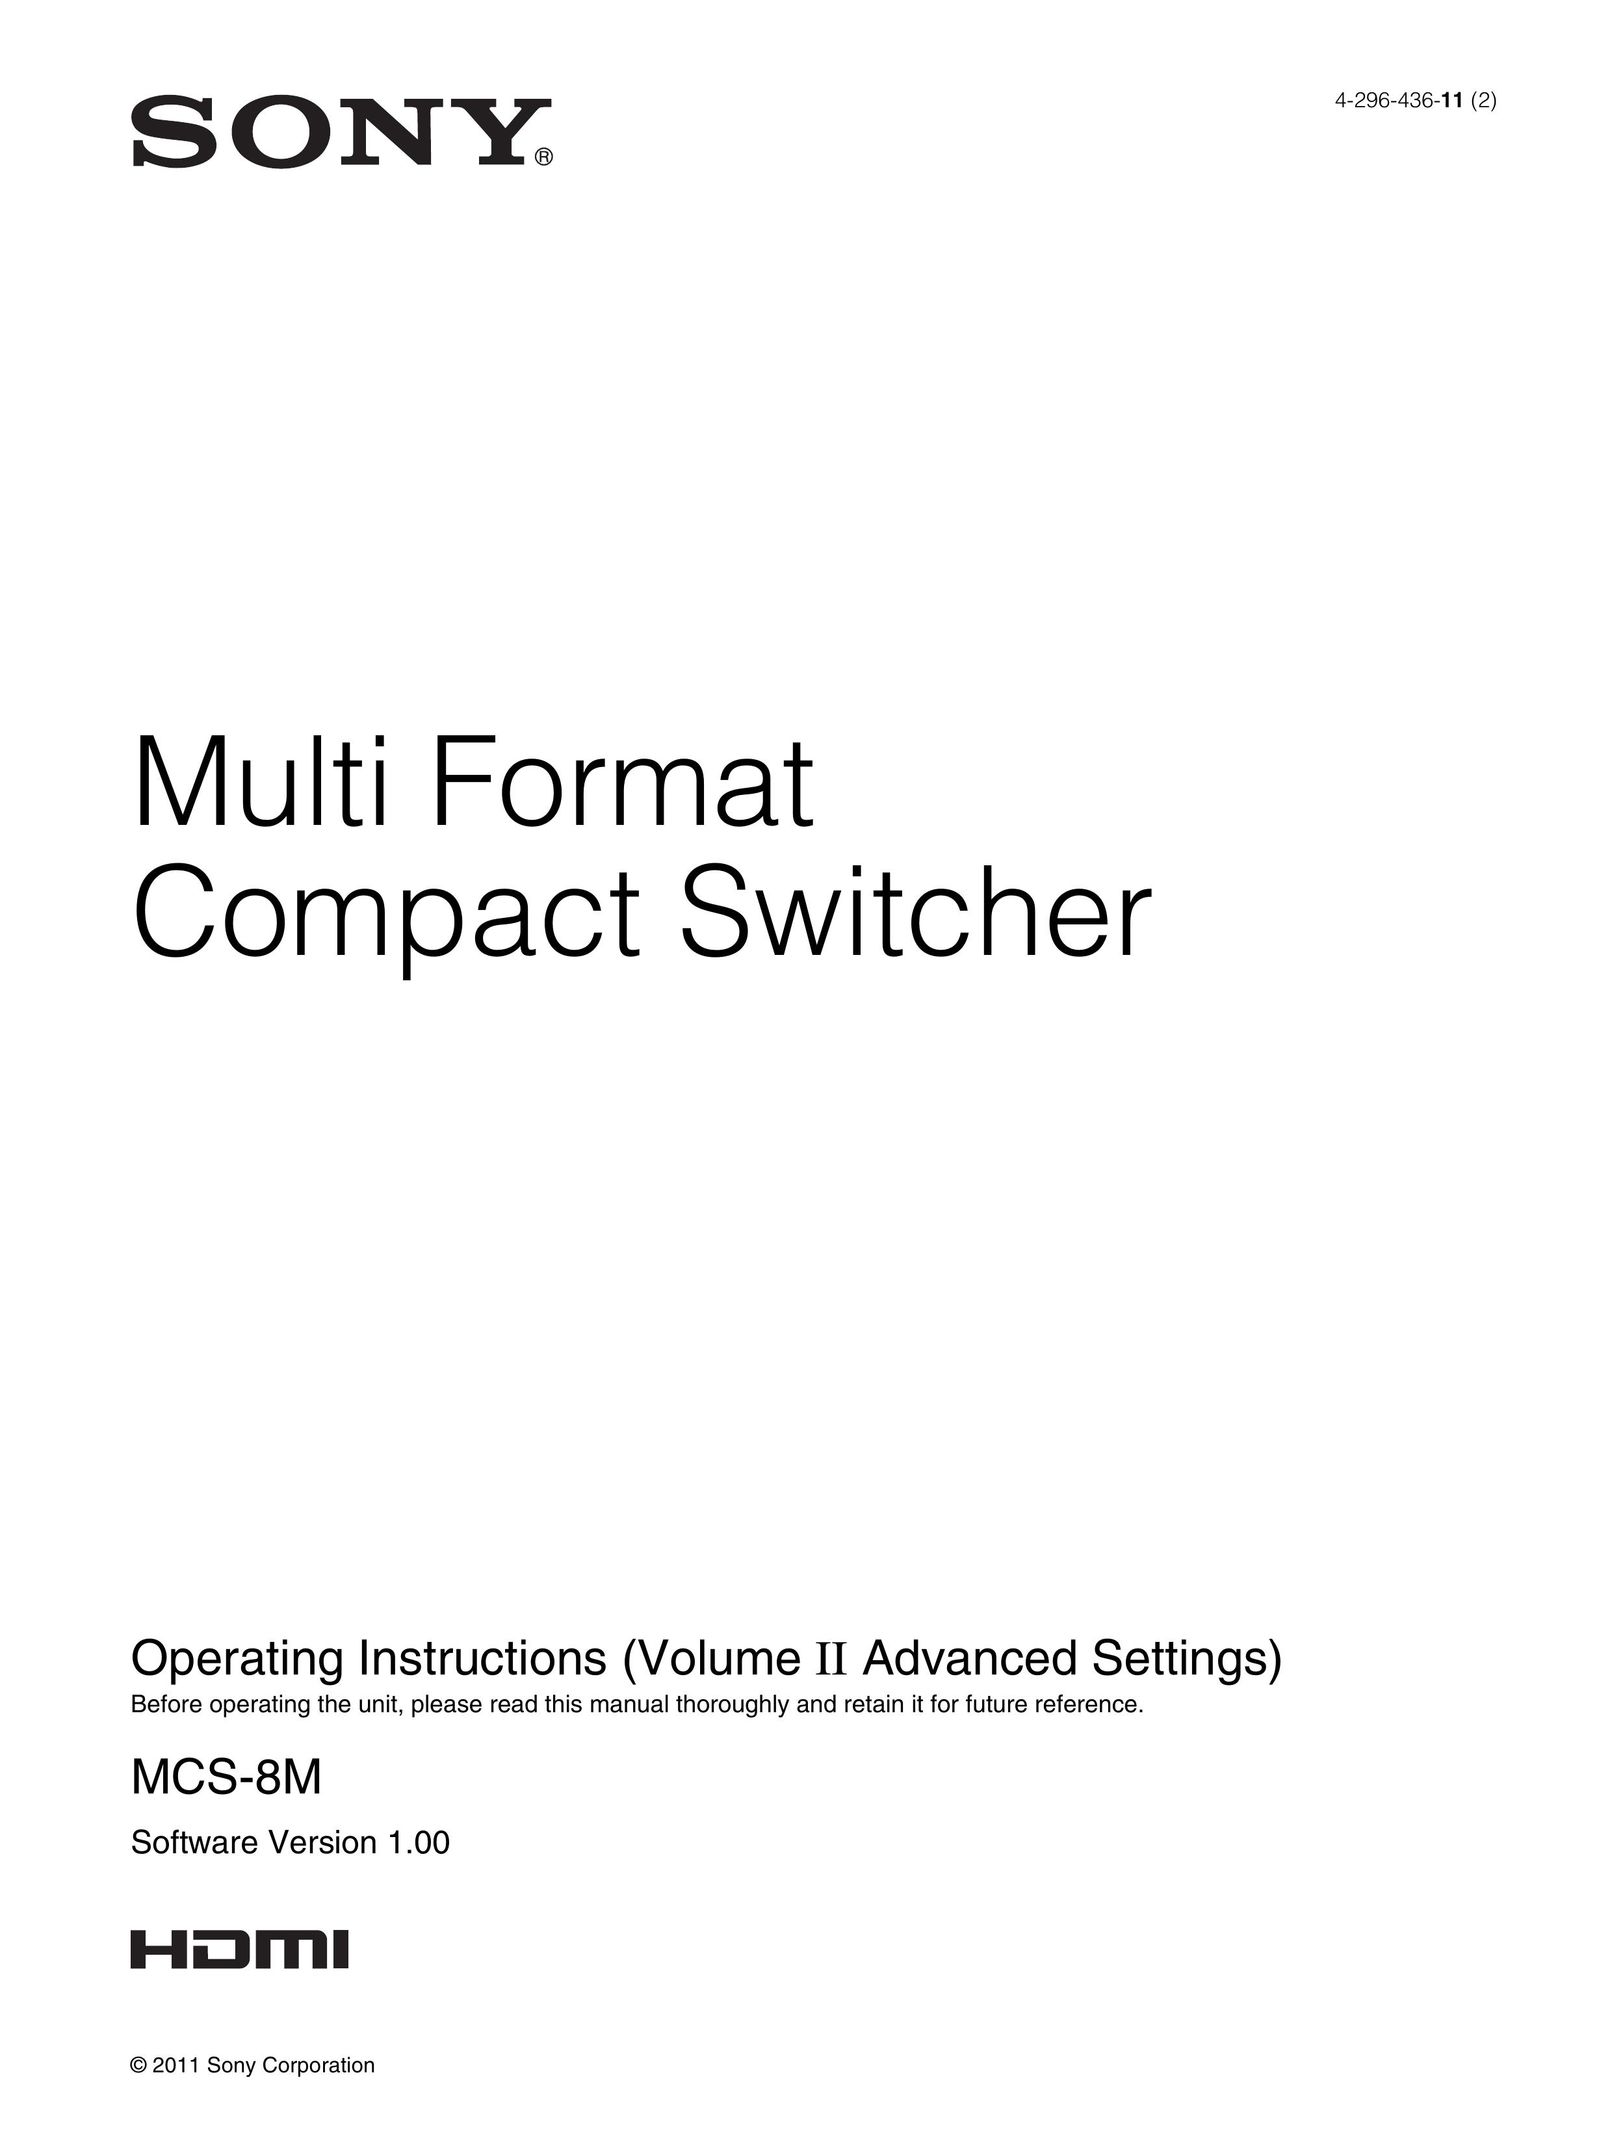 Sony 4-296-436-11 (2) Switch User Manual